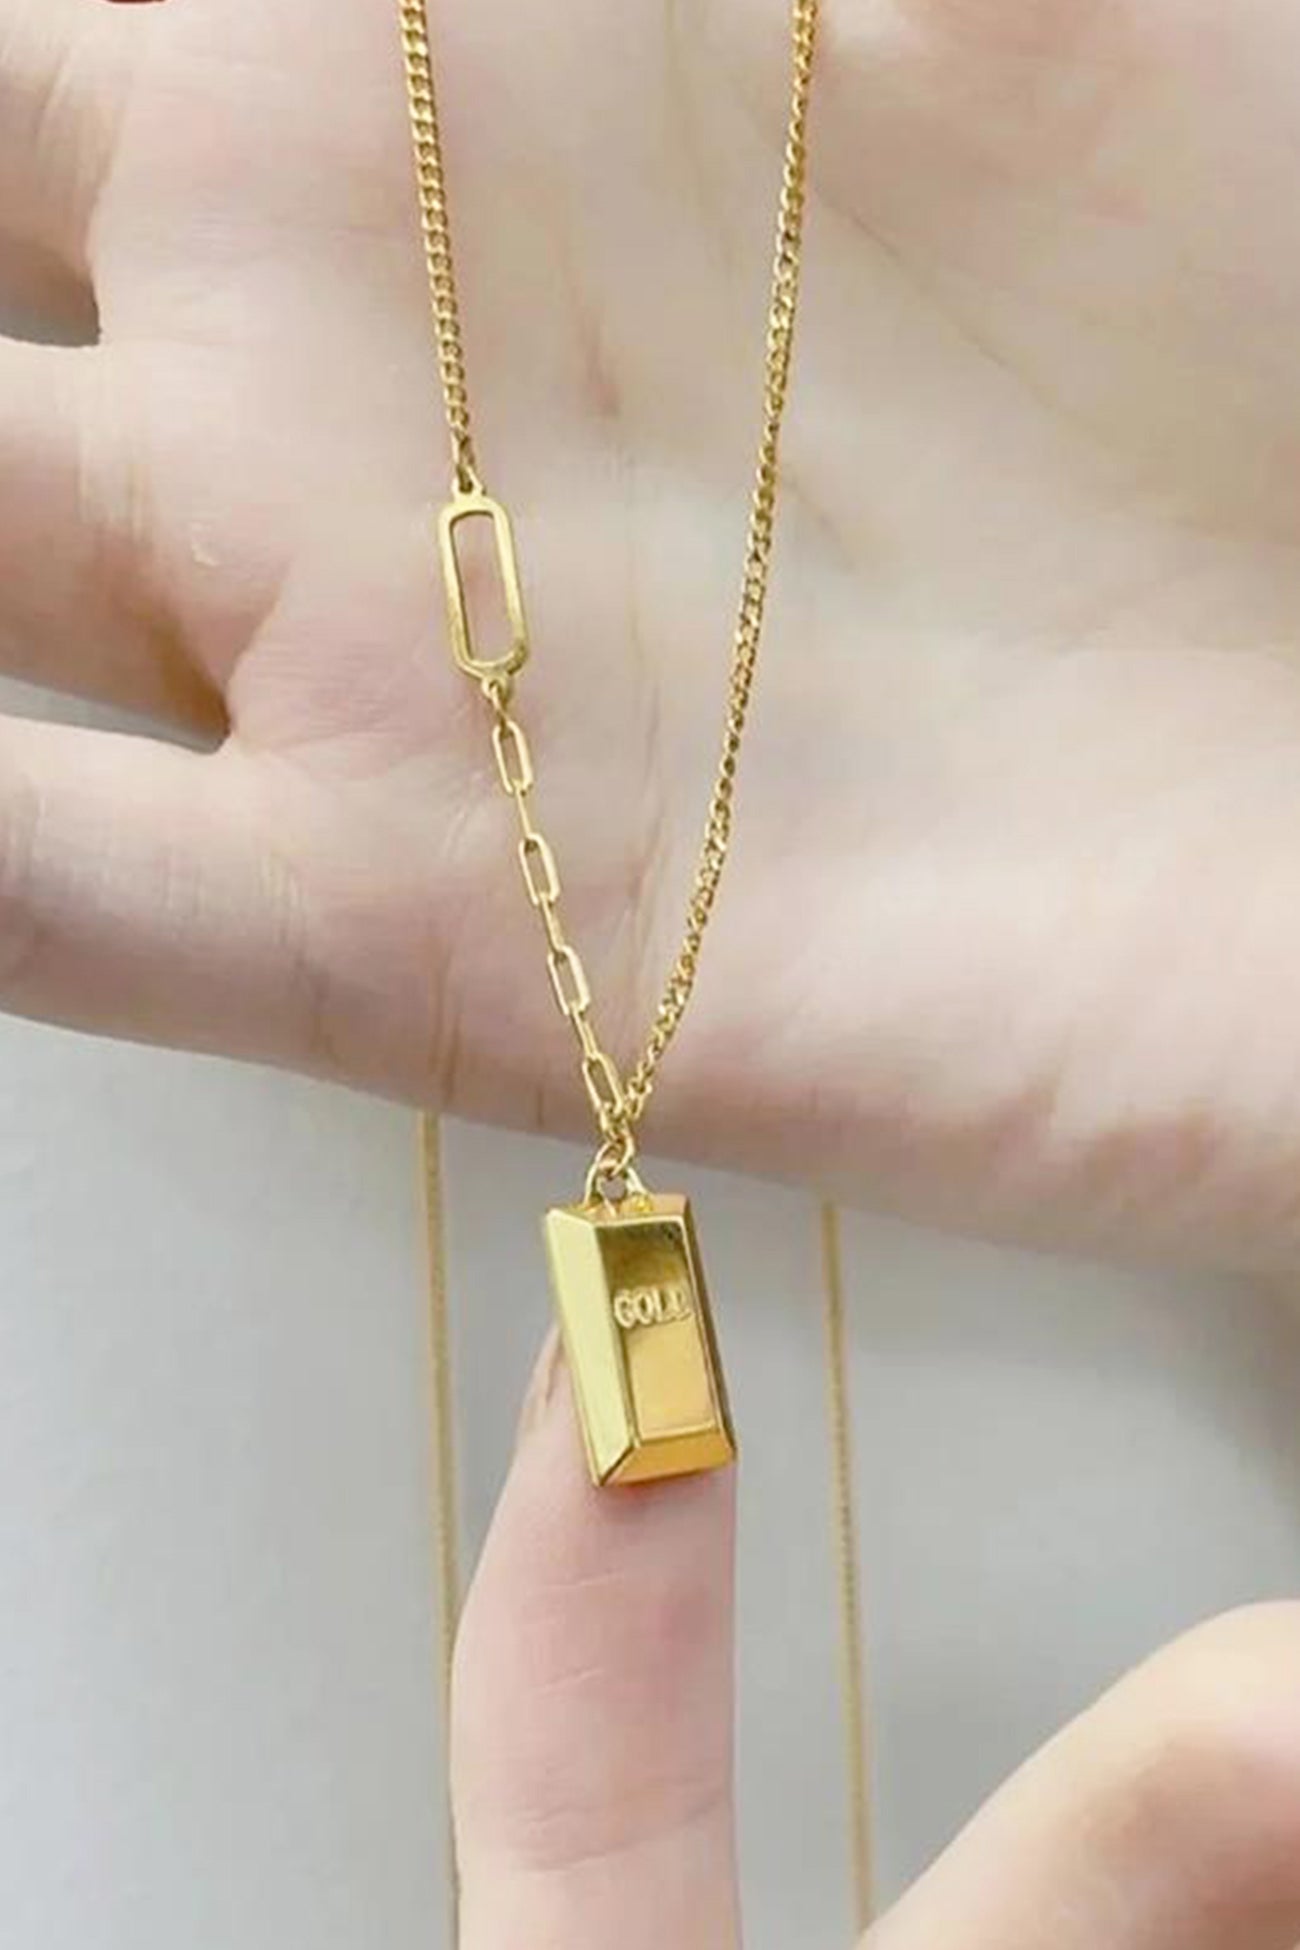 Flytonn-Valentine's Day gift Small Gold Brick Pendant Necklace